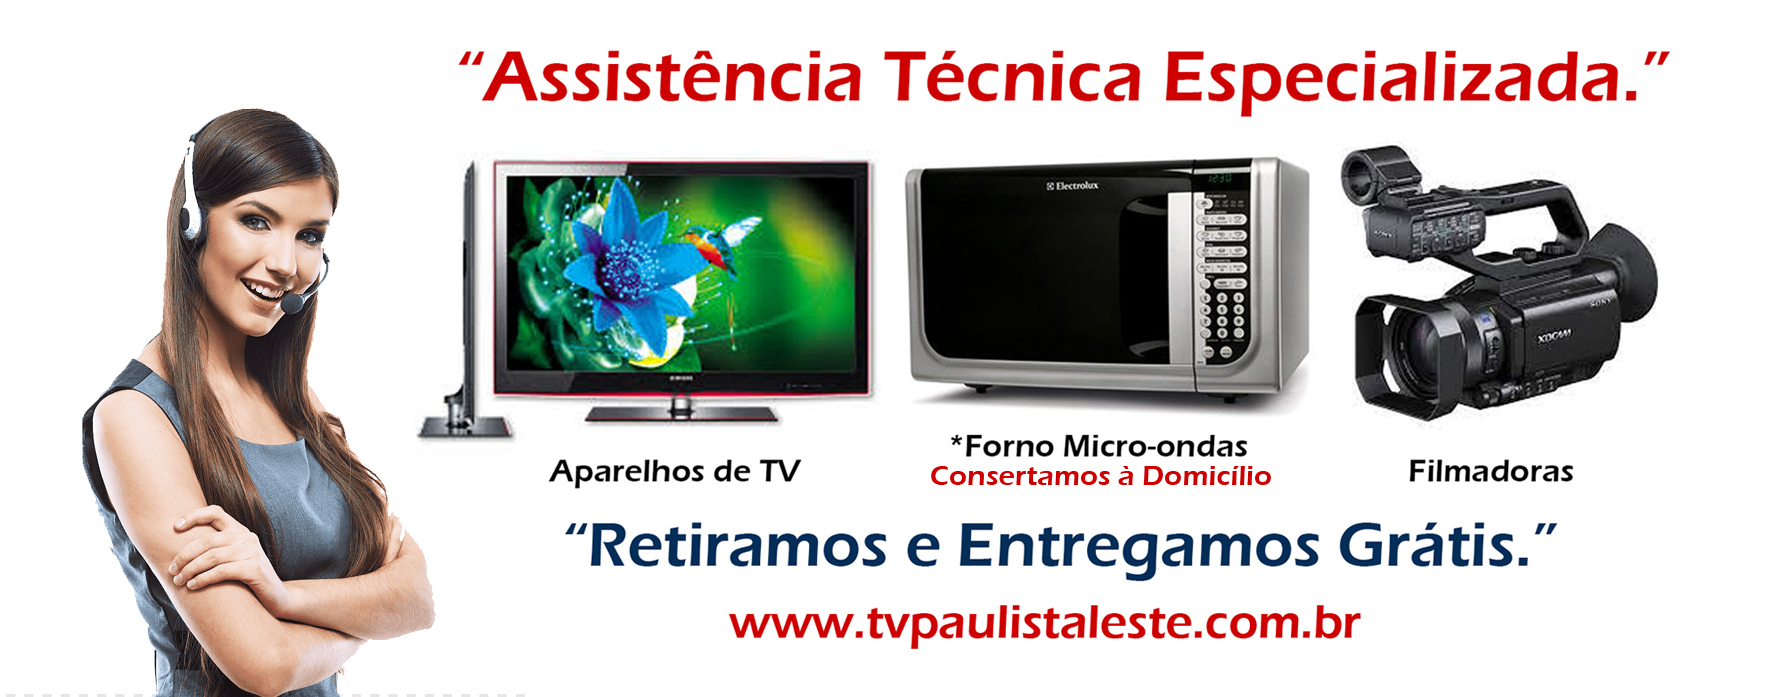 TV Paulista. Assistência Técnica Especializada.